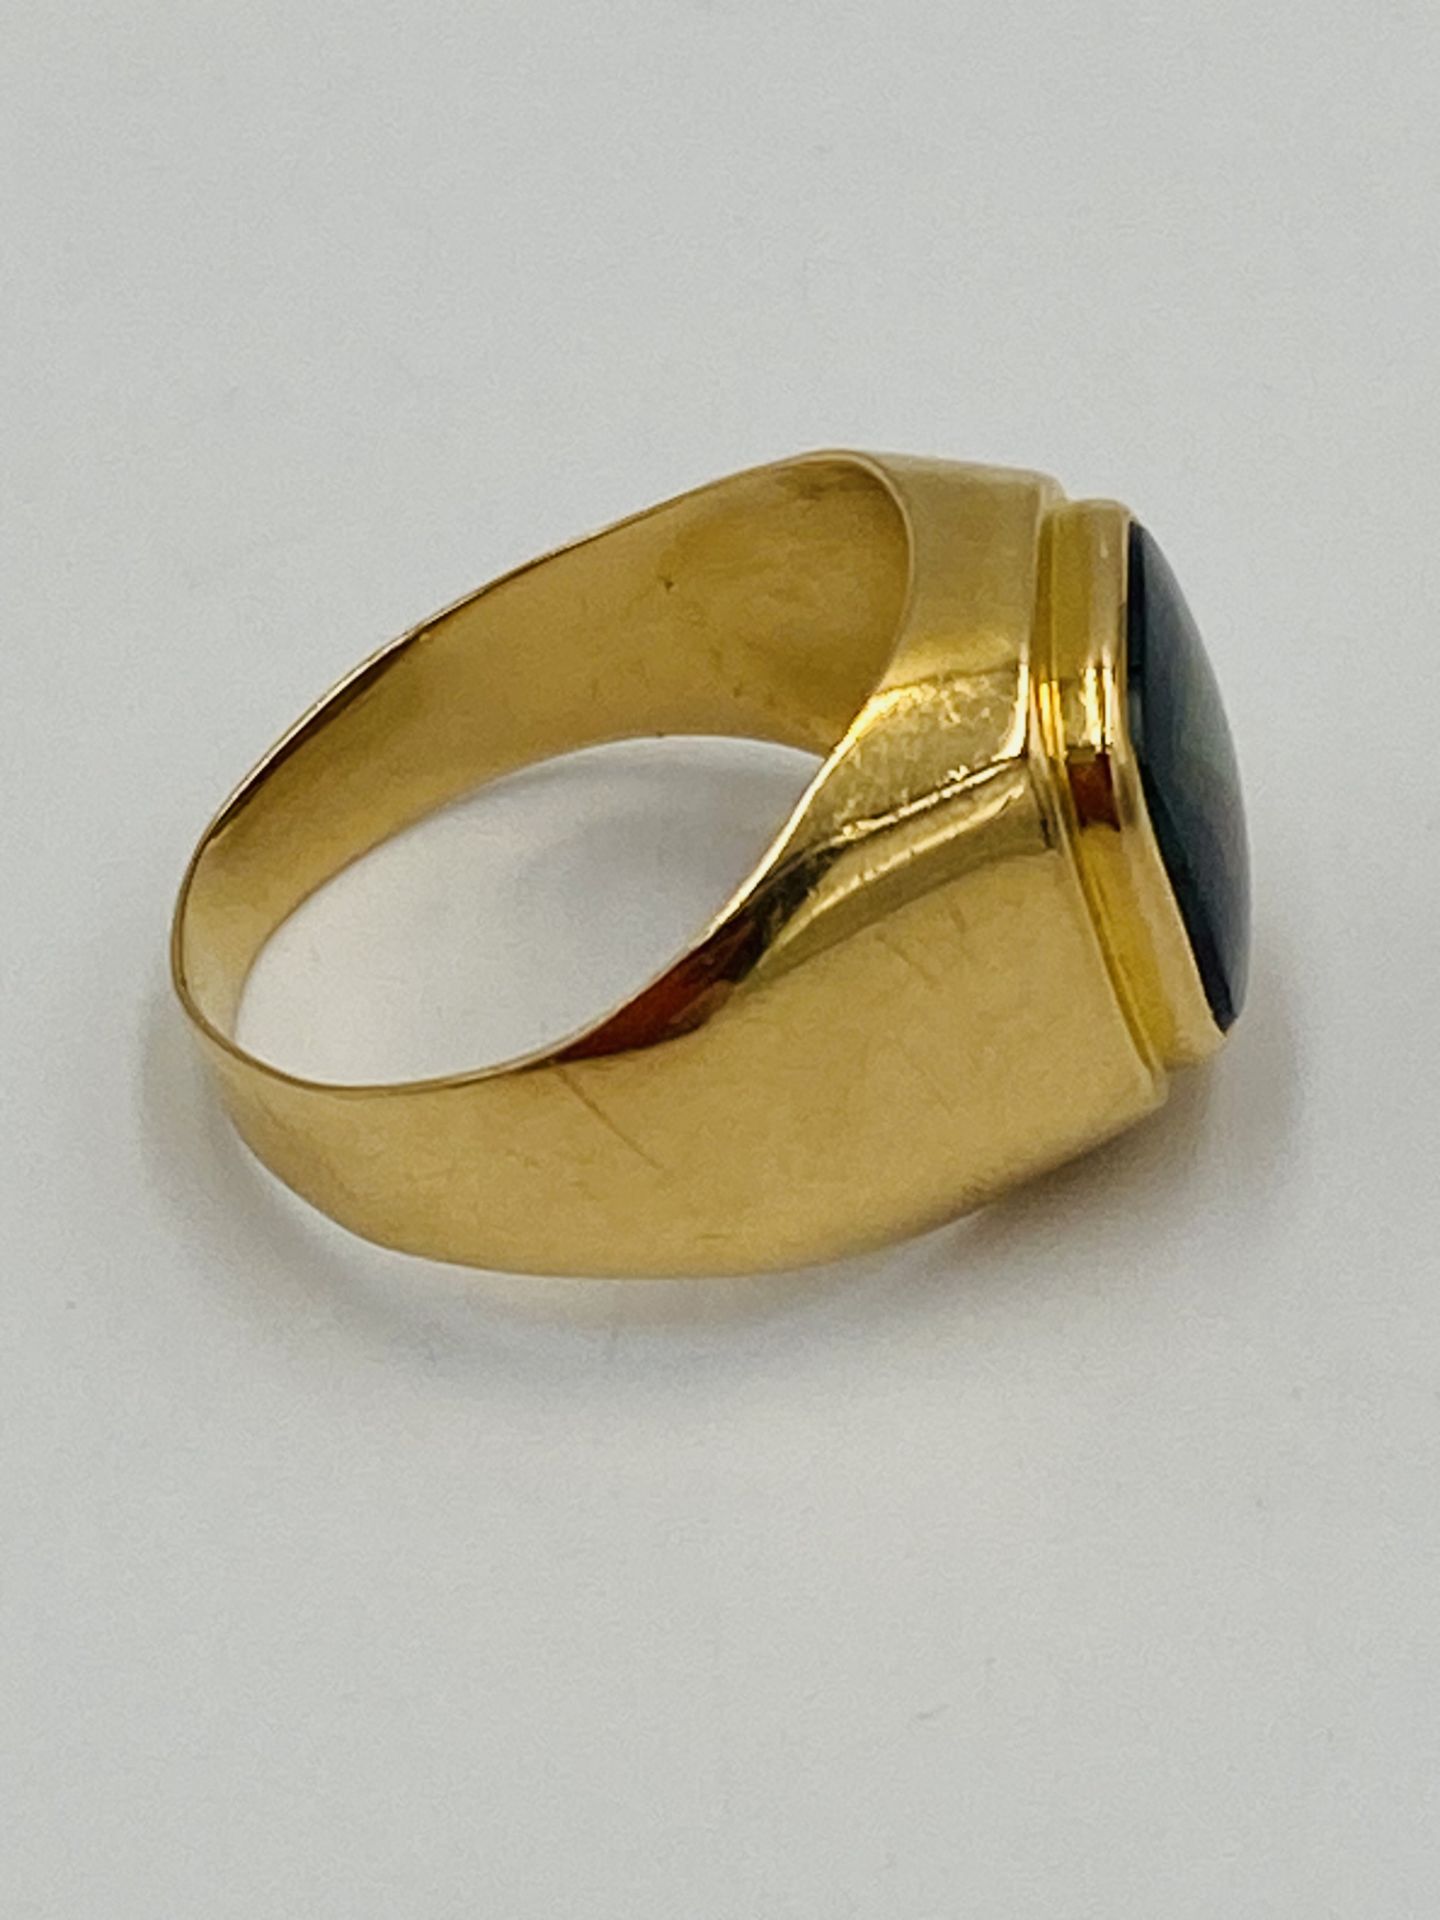 18ct gold signet ring - Image 4 of 5